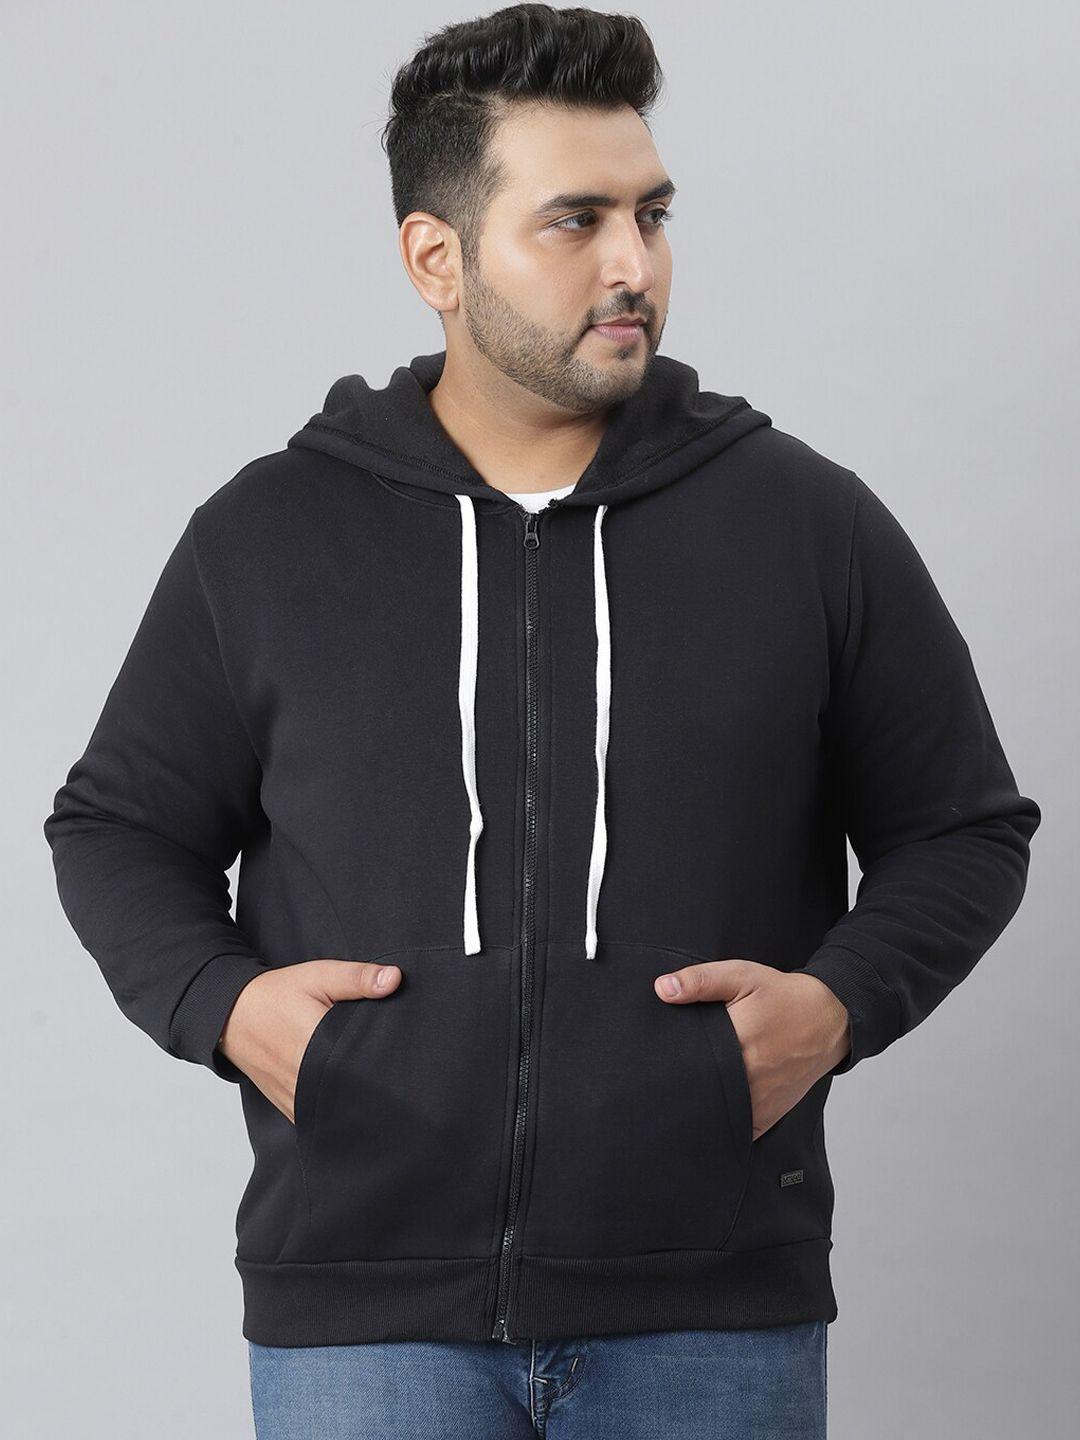 instafab-plus-men-black-hooded-sweatshirt